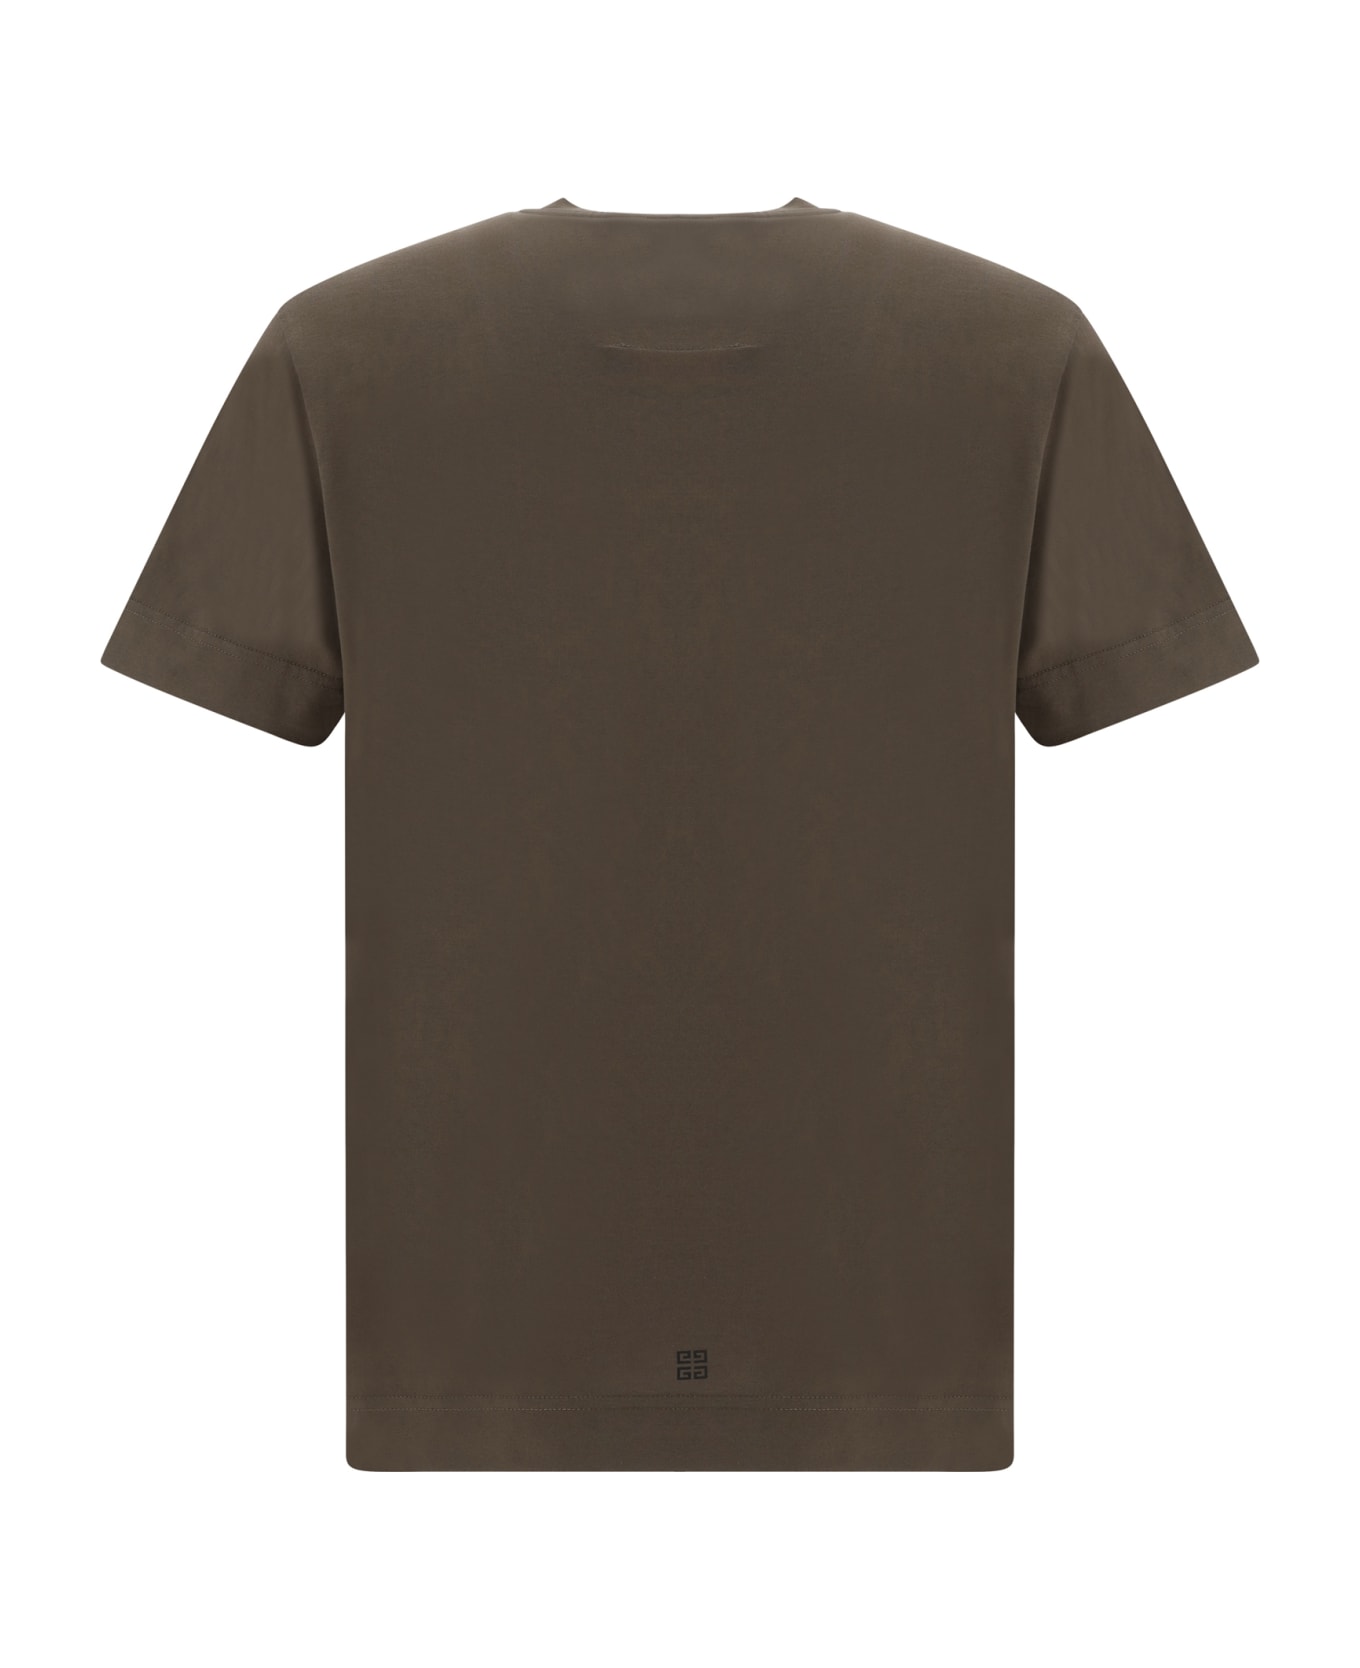 Givenchy T-shirt - Khaki